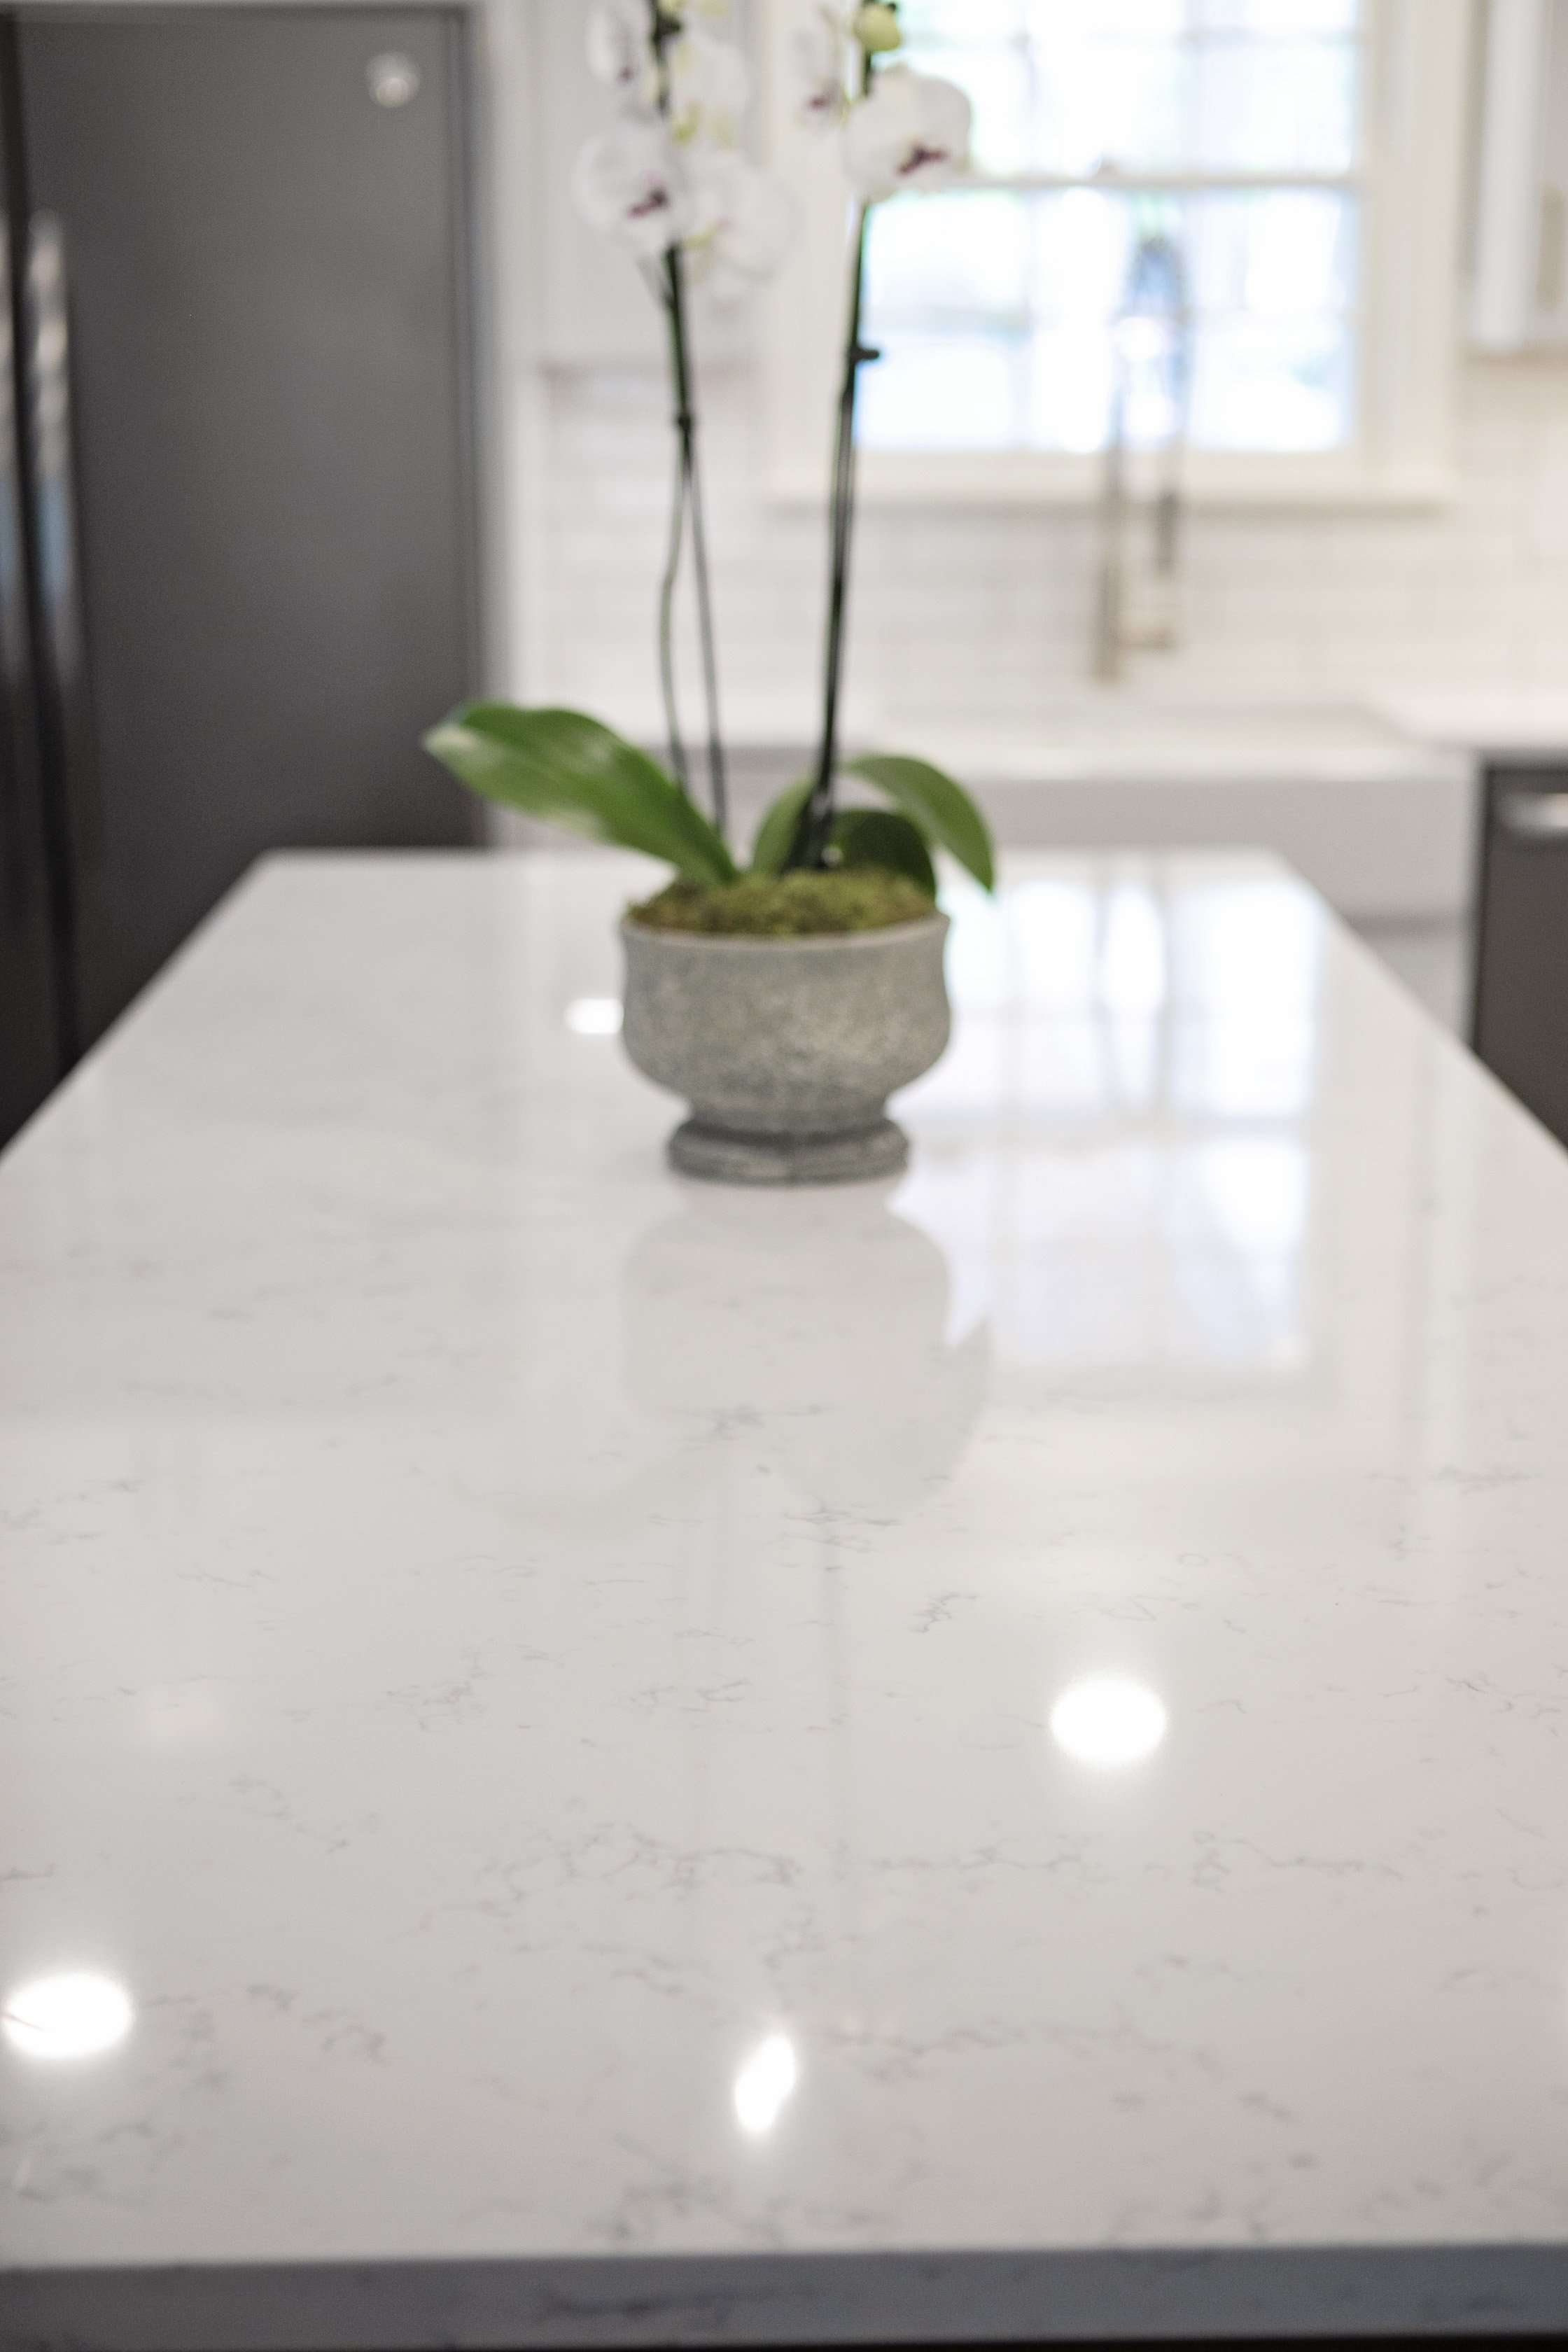 Carrara Lumos quartz countertops contrast beautifully with the wood. 